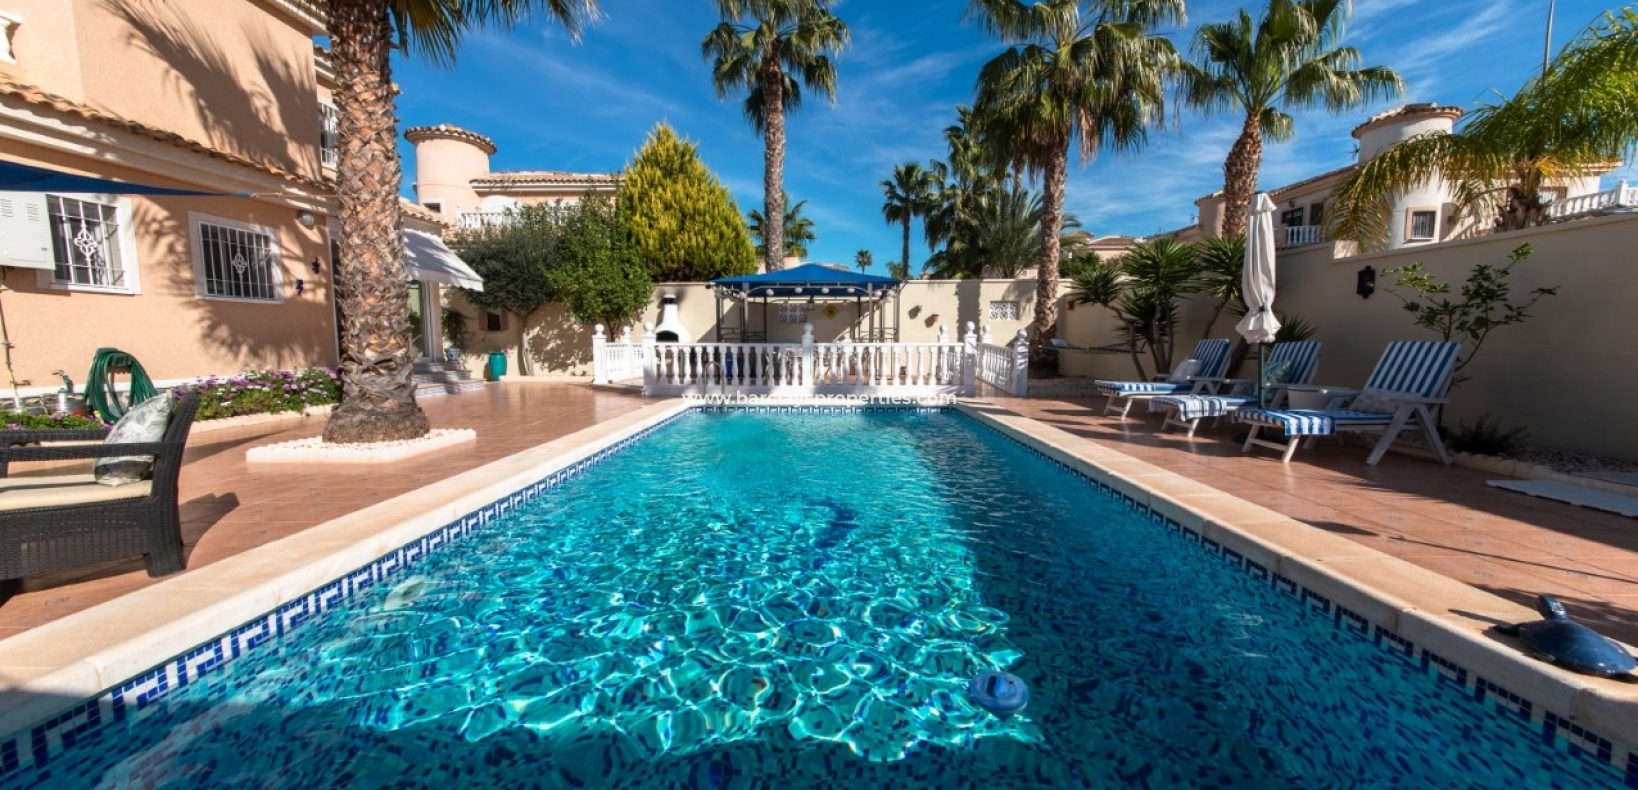 Swimming pool - villa for sale in urbanisation La Marina Spain